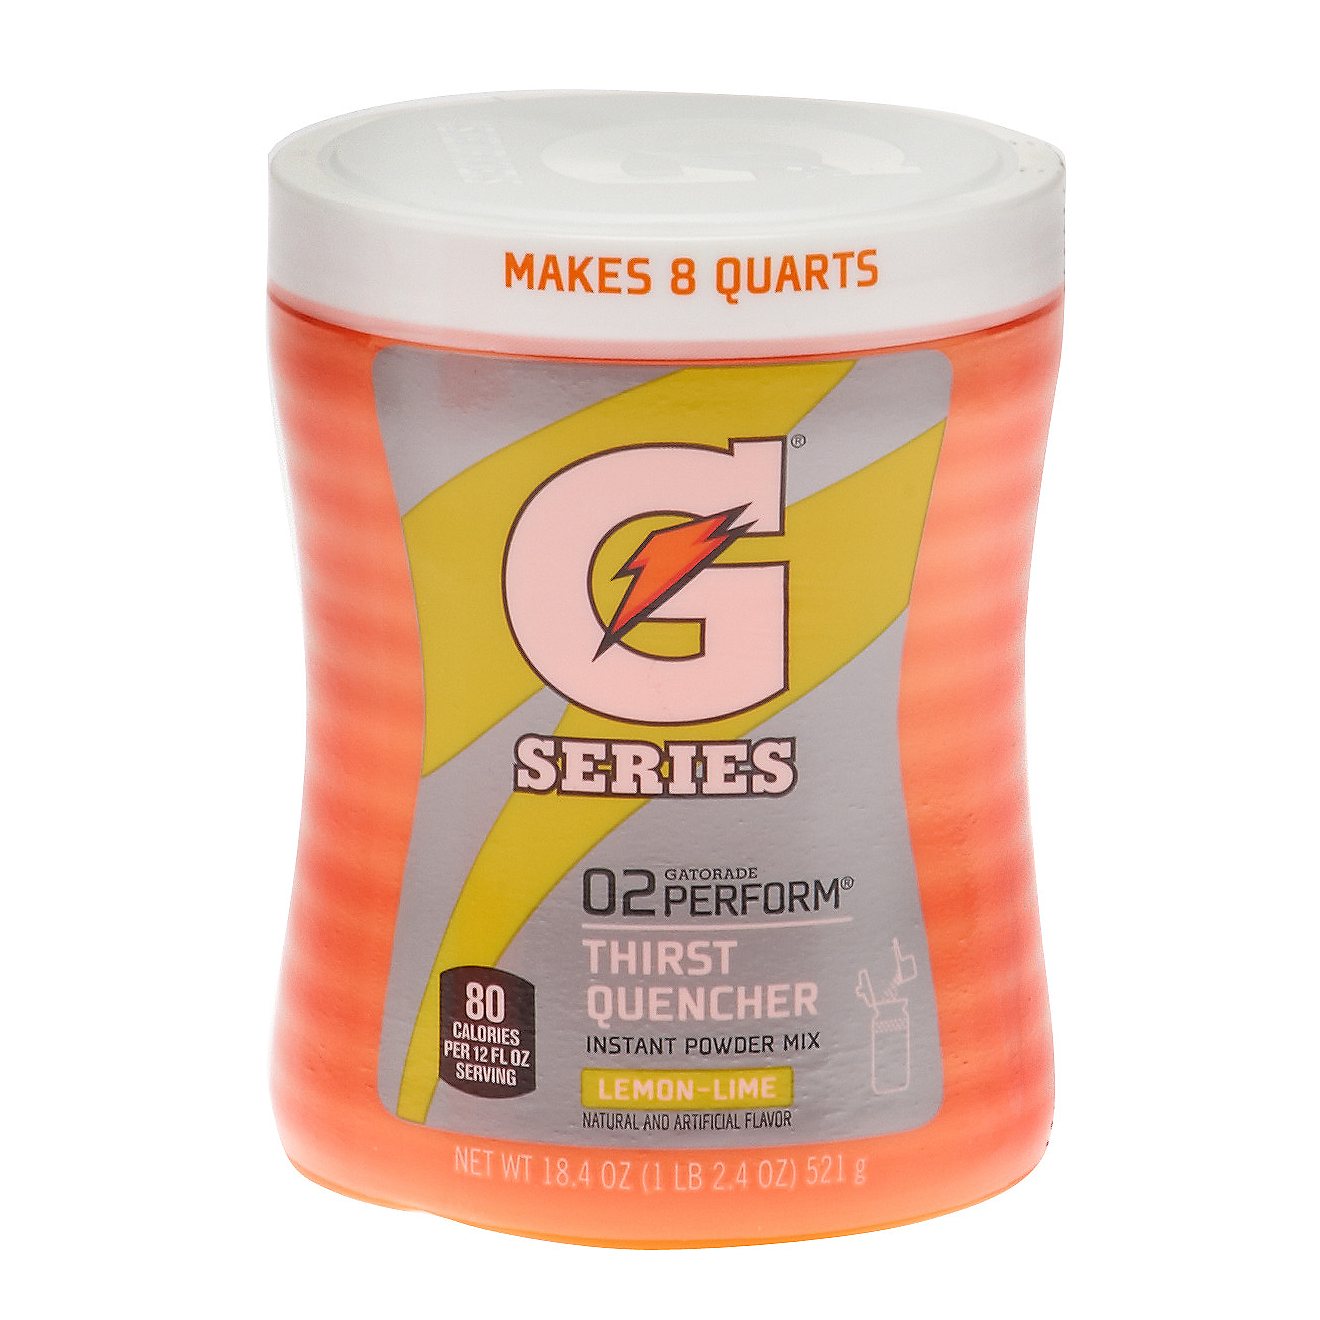 Gatorade G Series 02 Perform Thirst Quencher Instant Powder Mix                                                                  - view number 1